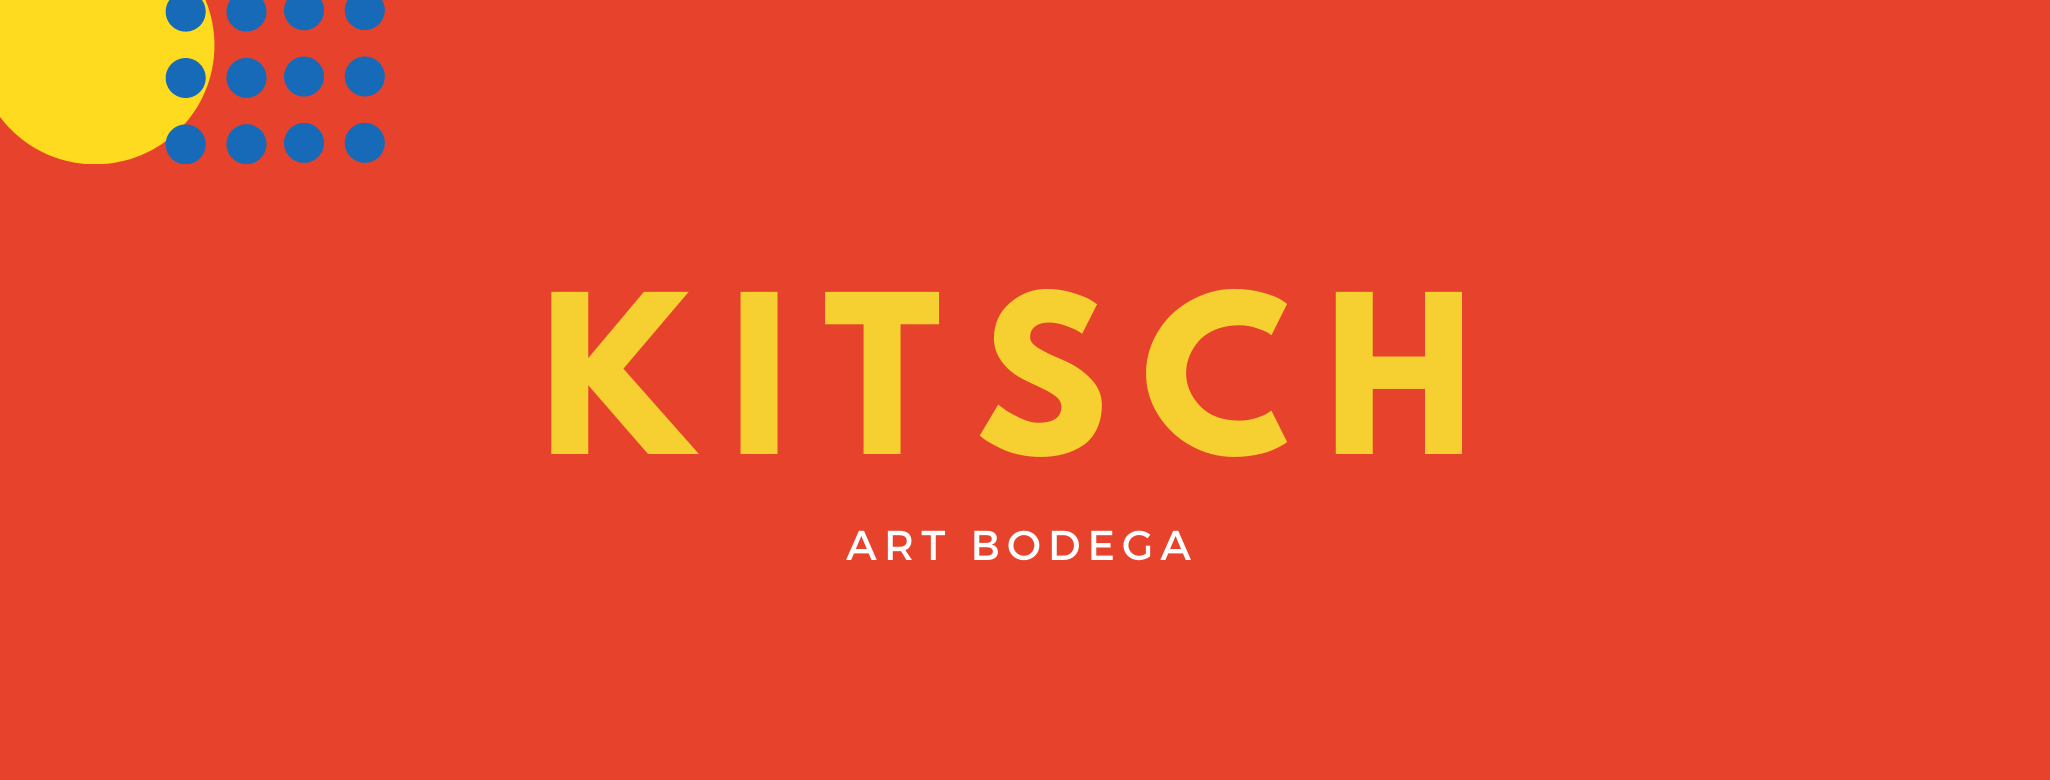 Copy of Kitsch Art Bodega .png